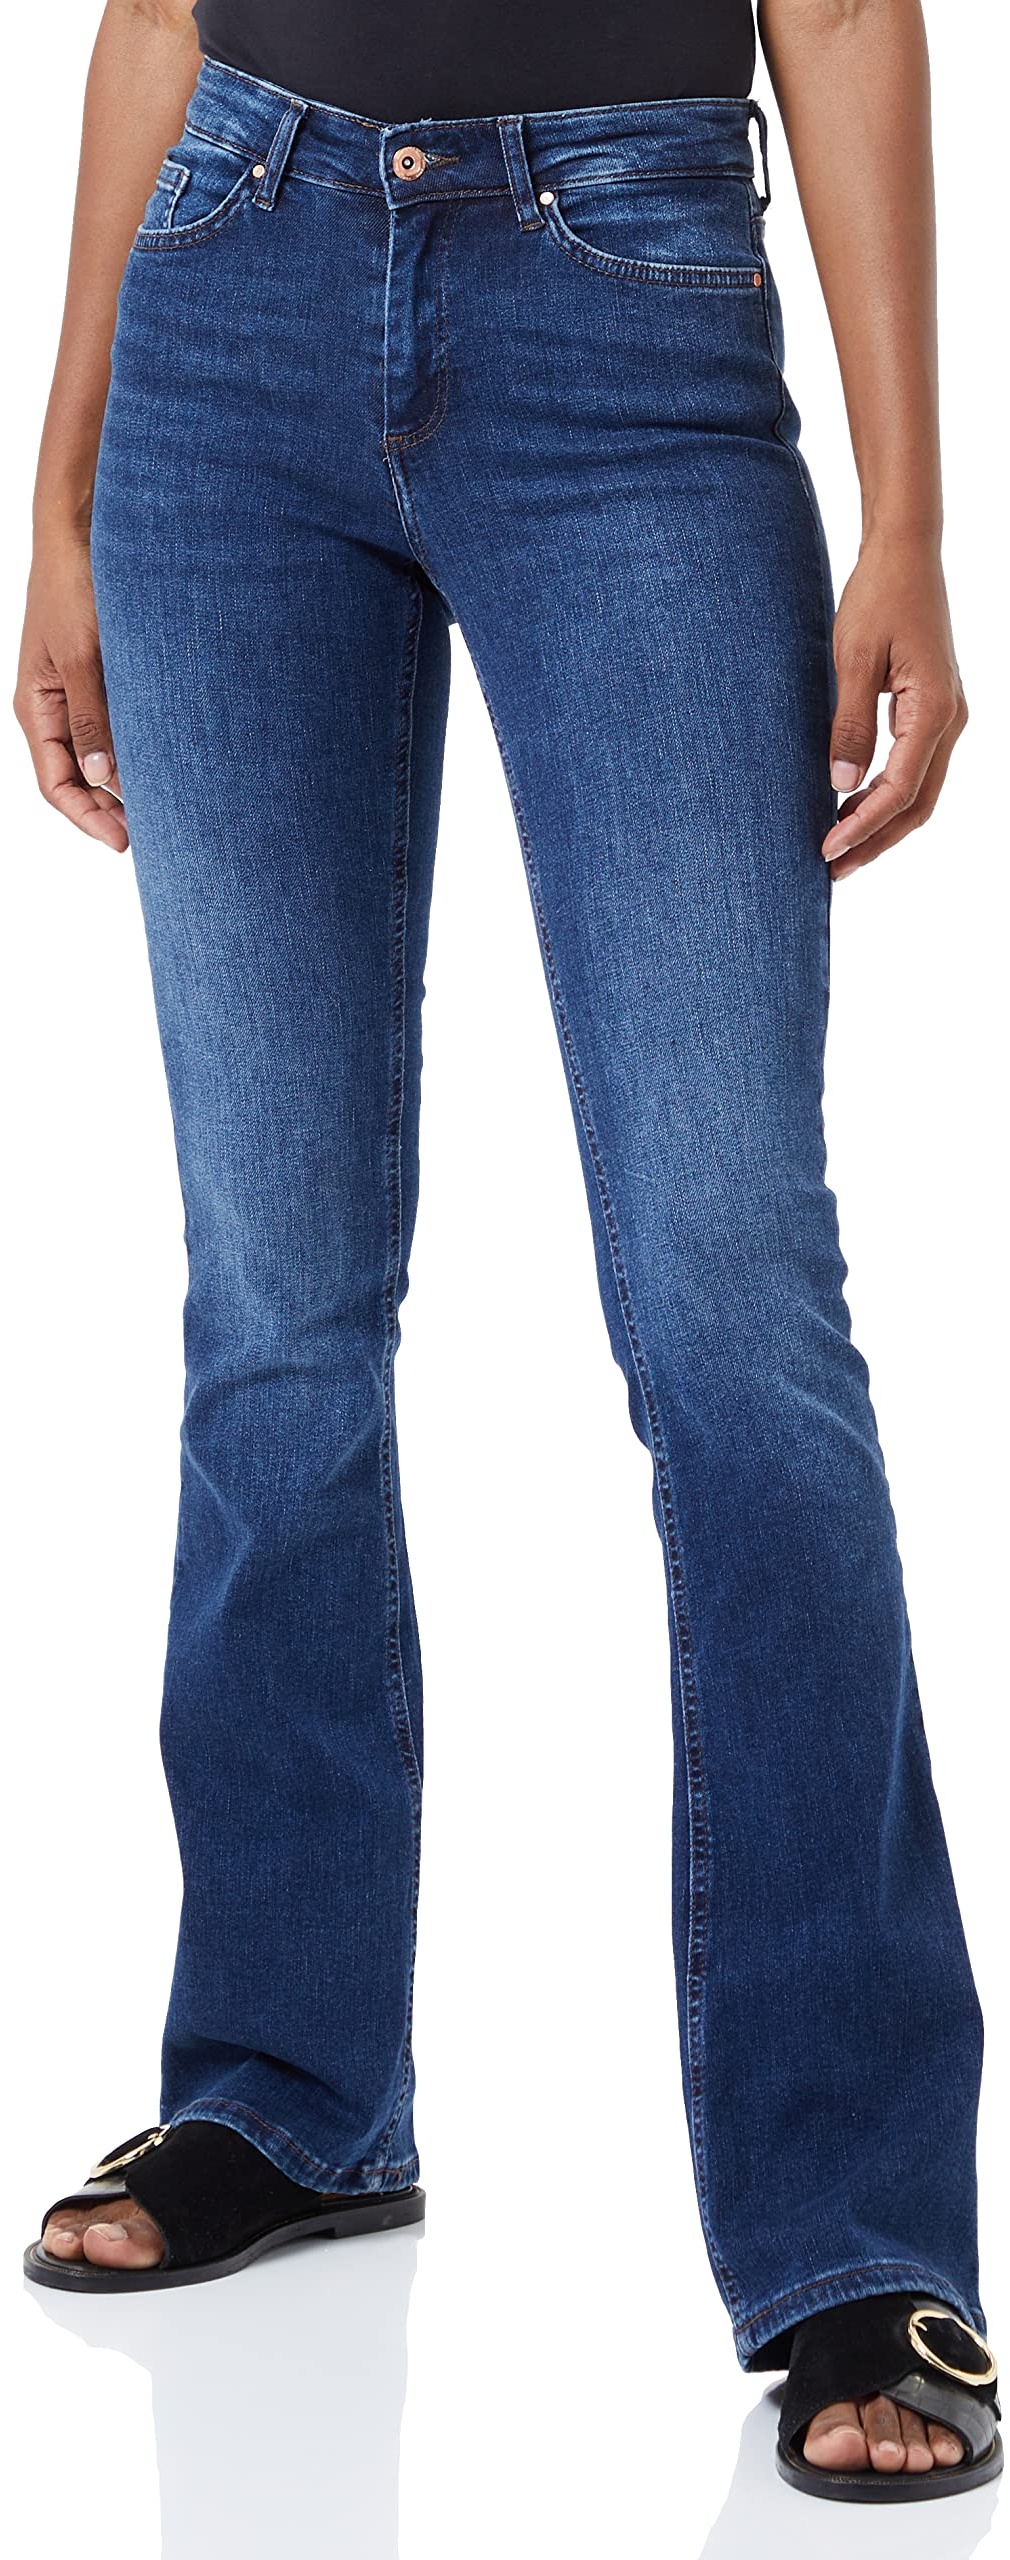 ONLY Damen Onlblush Mid flared Dnm Tai021 Noos Jeans, Dark Blue Denim, S / 32L EU